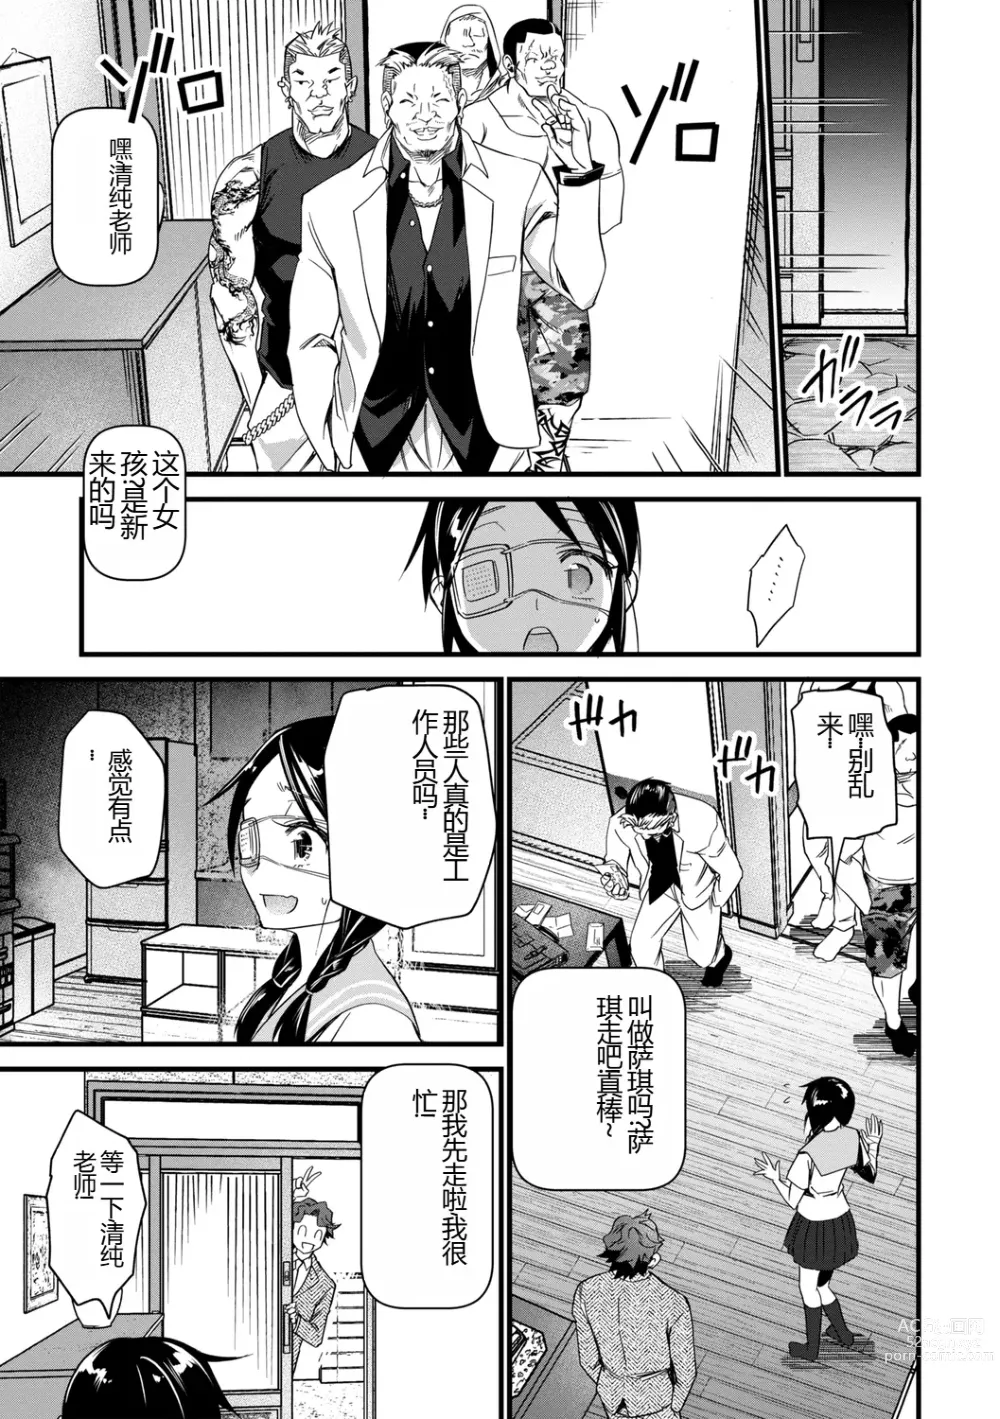 Page 13 of manga Nikugyaku Egoism